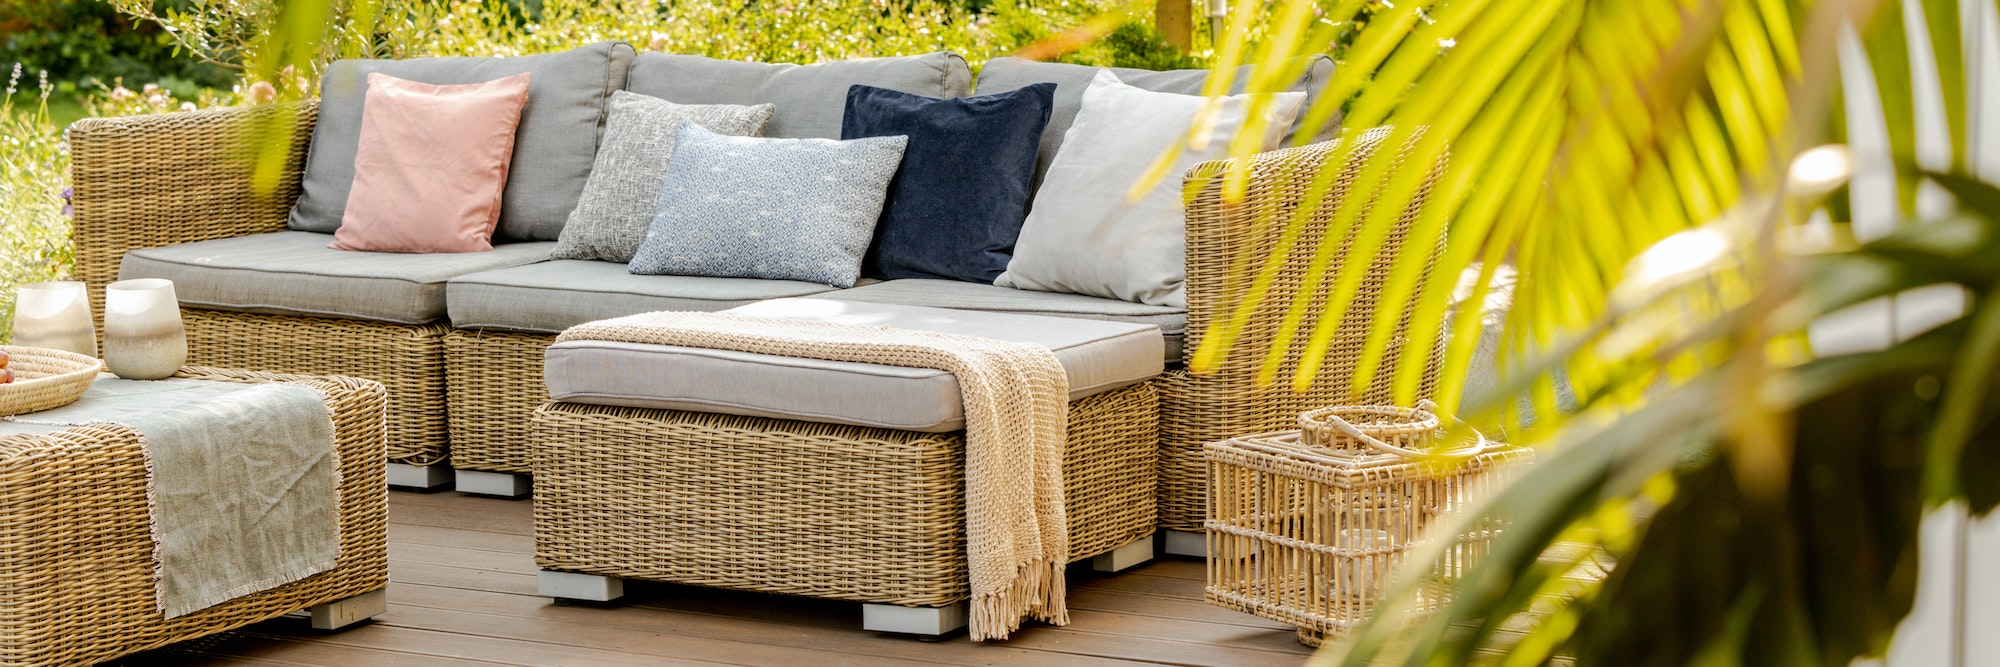 Tips for buying used Rattan Furniture - Rattan Garden Furniture | Patio ...